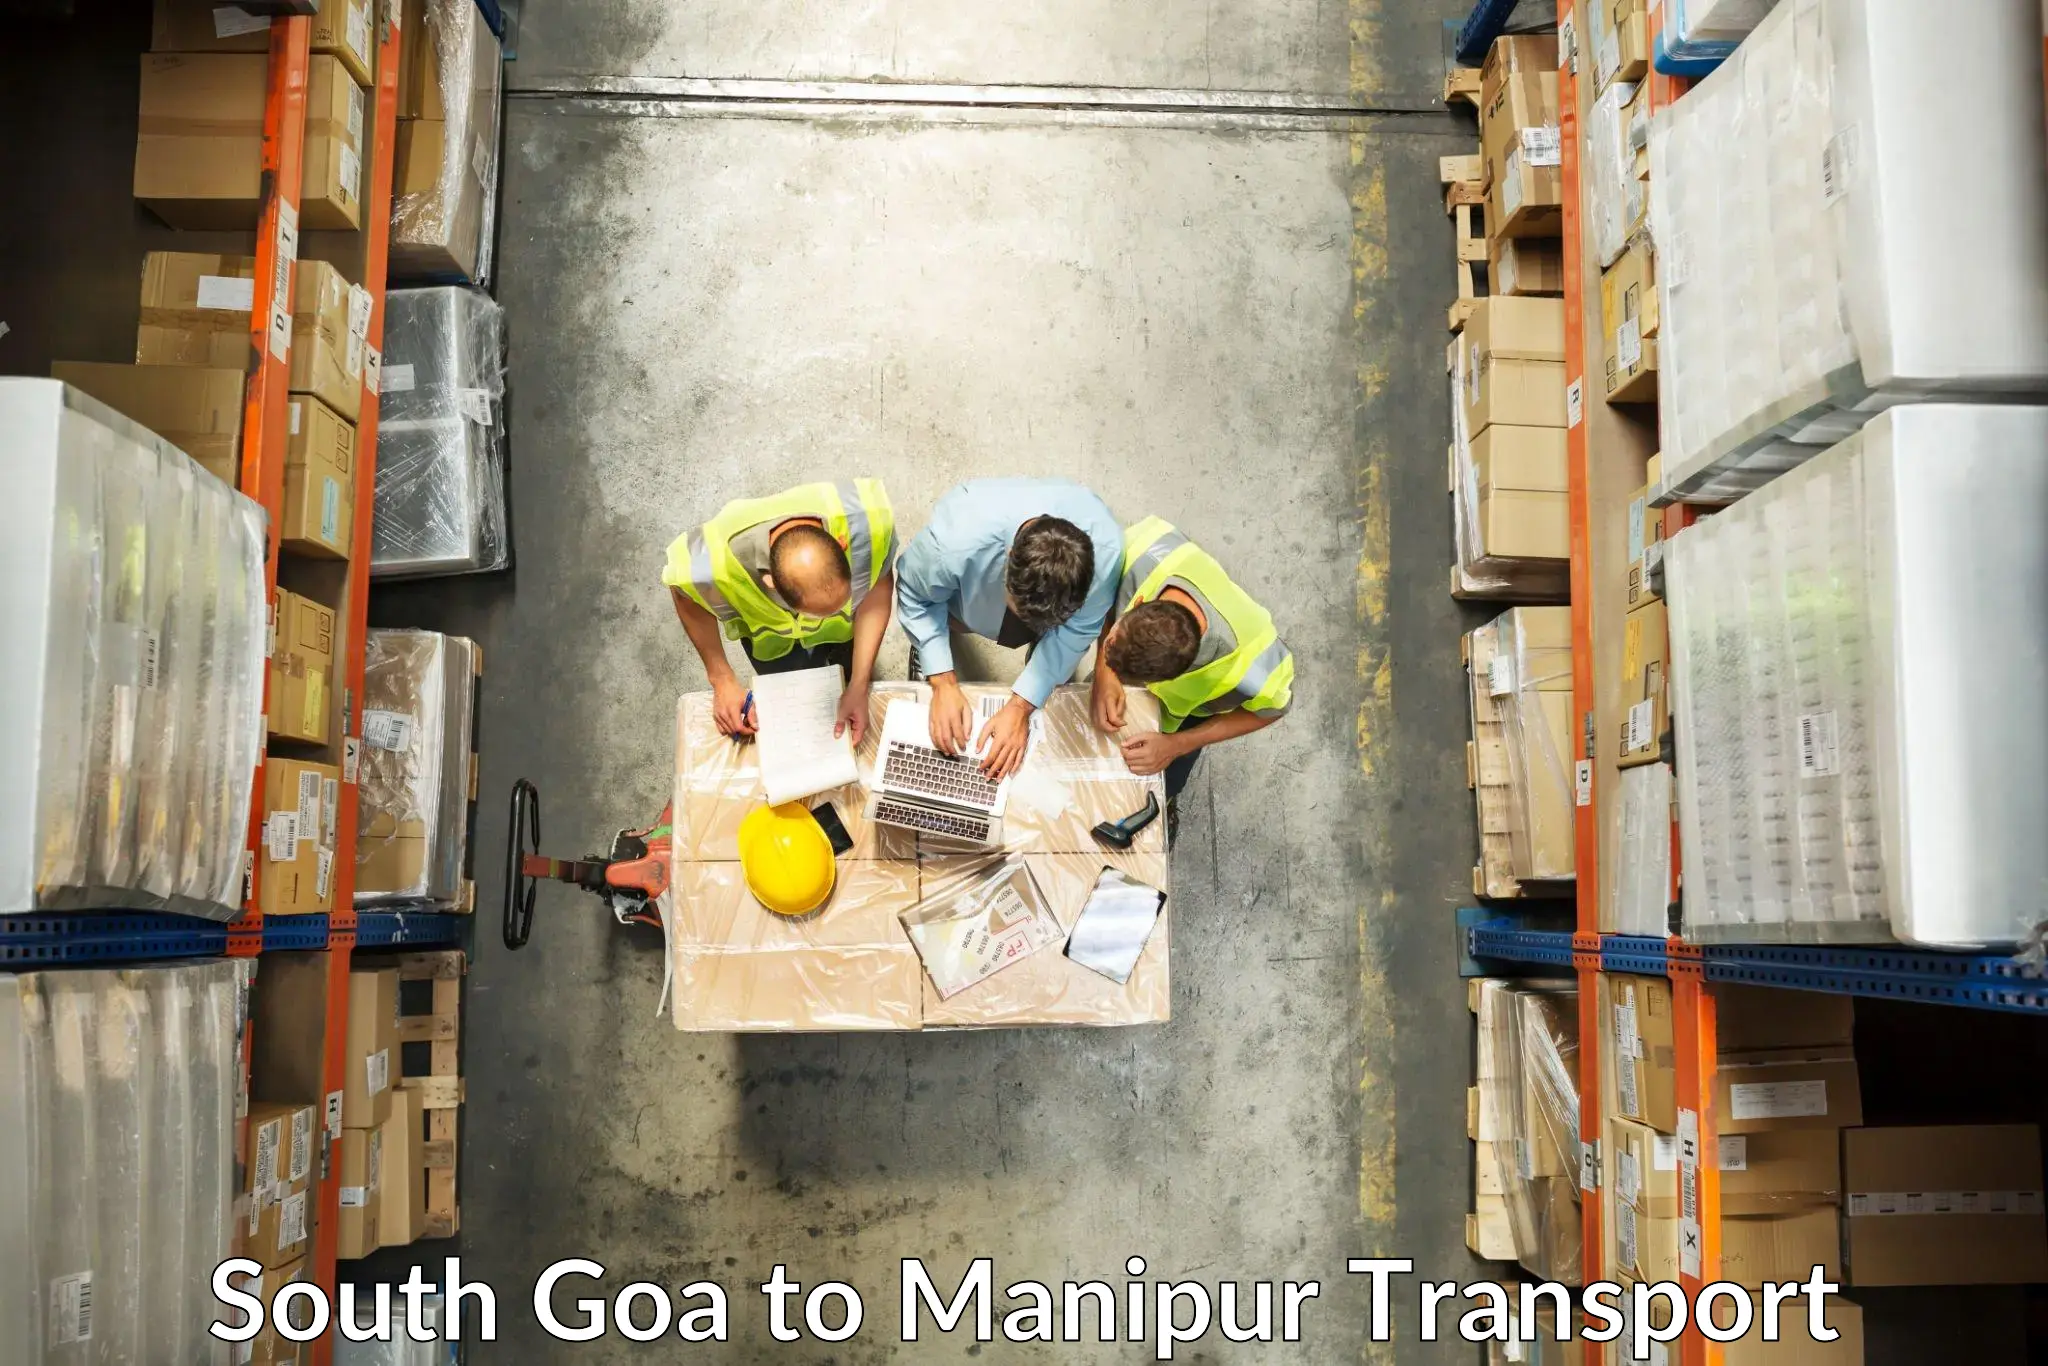 Bike shipping service South Goa to Manipur